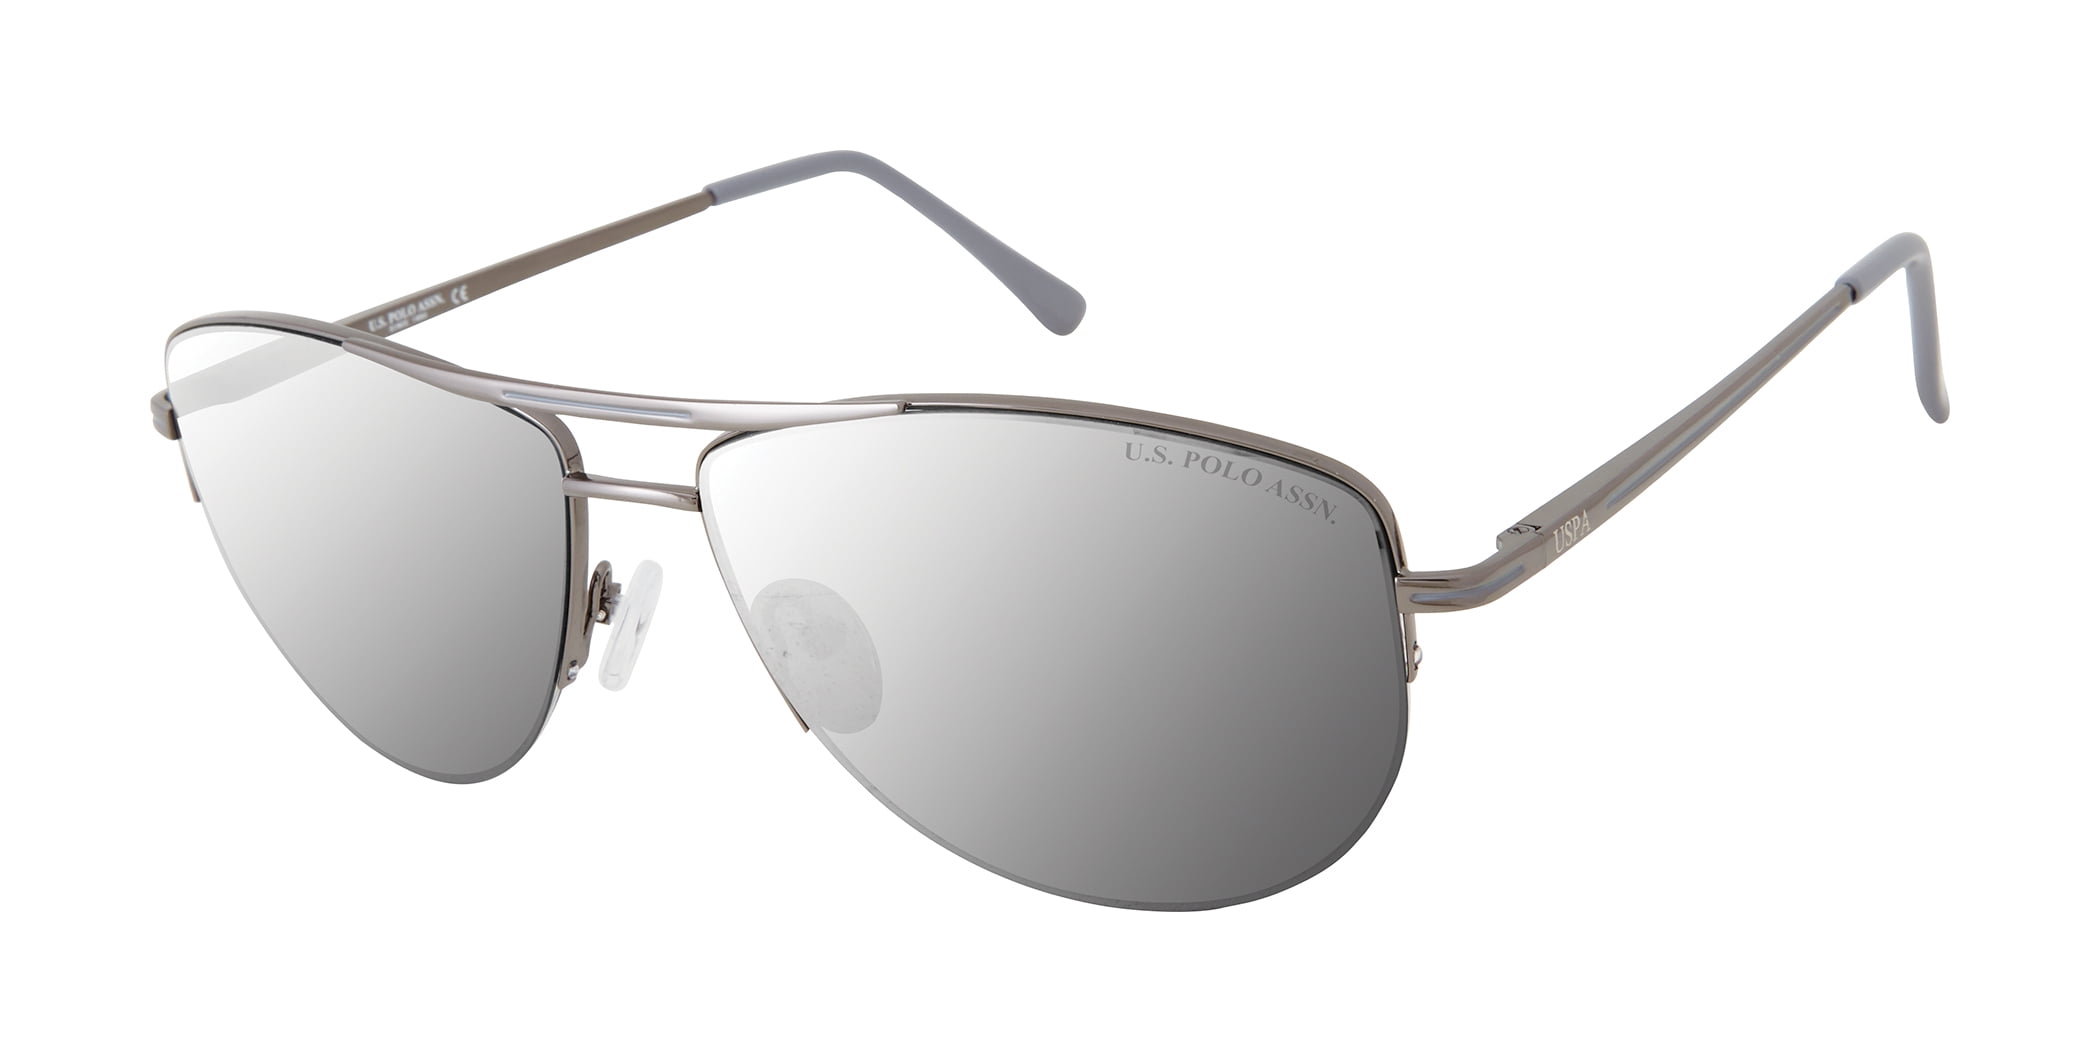 U.S. POLO ASSN. Men's Classic Semi-Rimless Metal Aviator Sunglasses ...